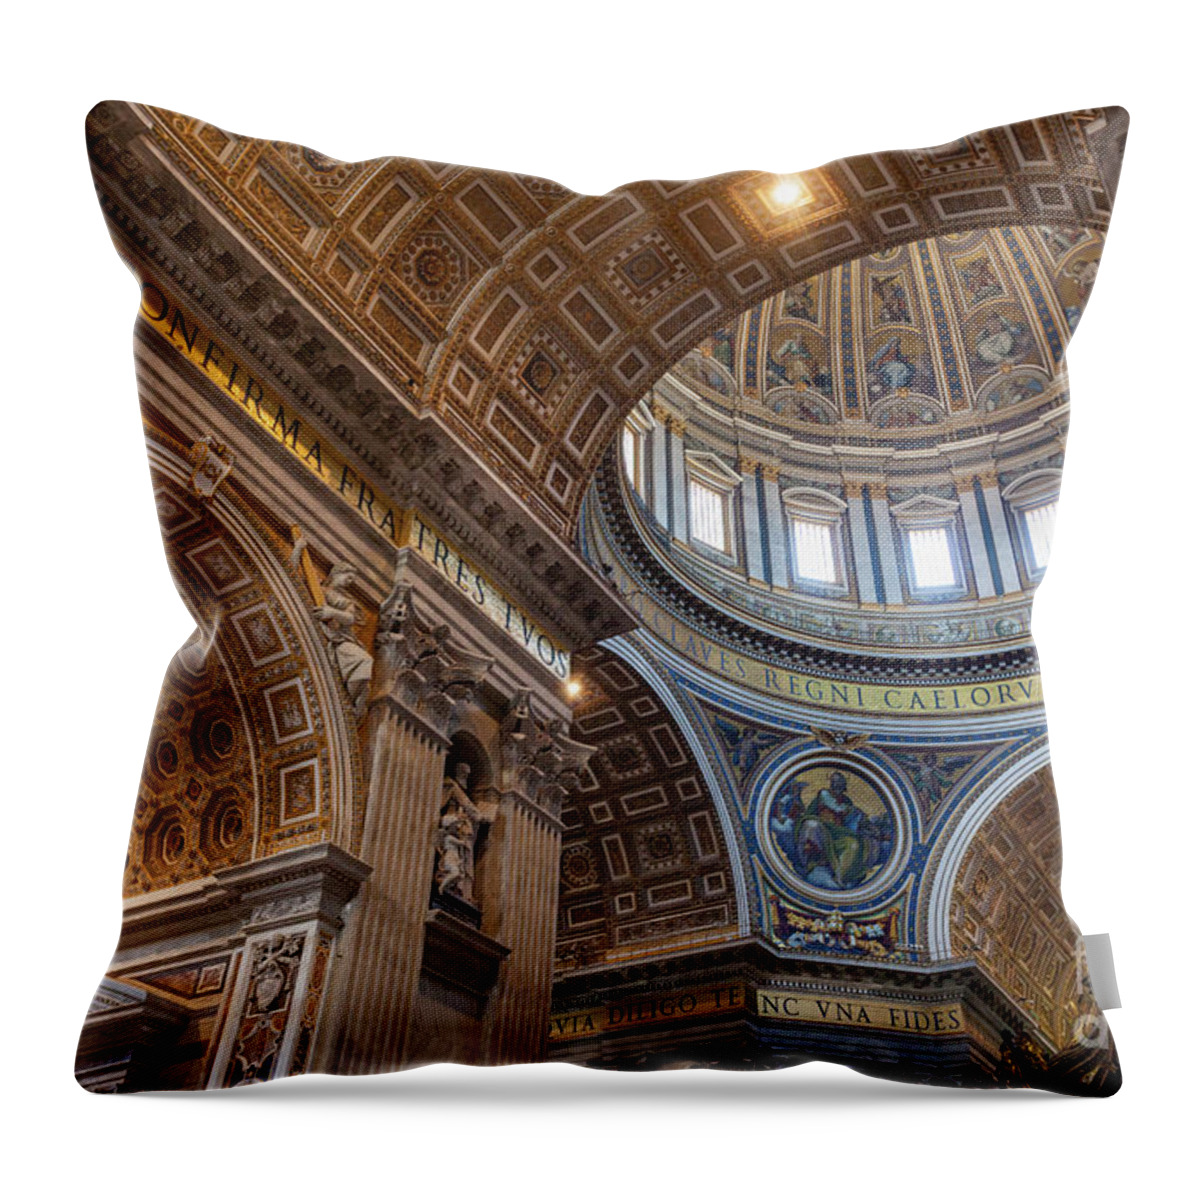 Vatican Throw Pillow featuring the photograph San Pietro Ceiling by Brian Jannsen